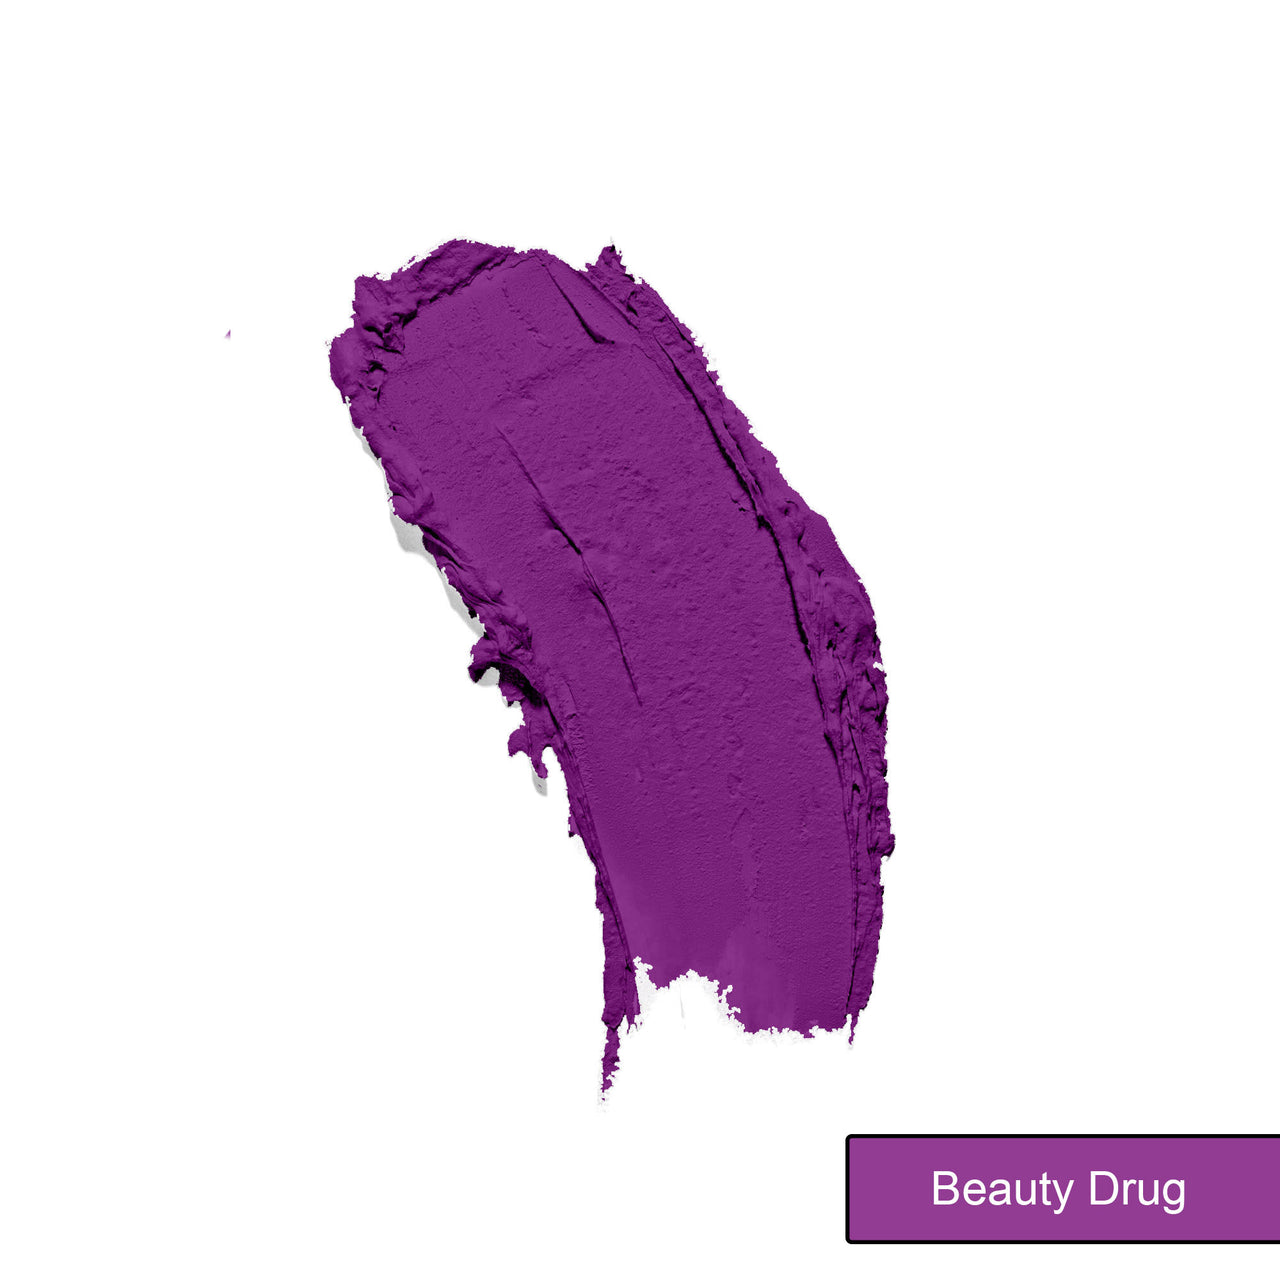 Beauty Drug